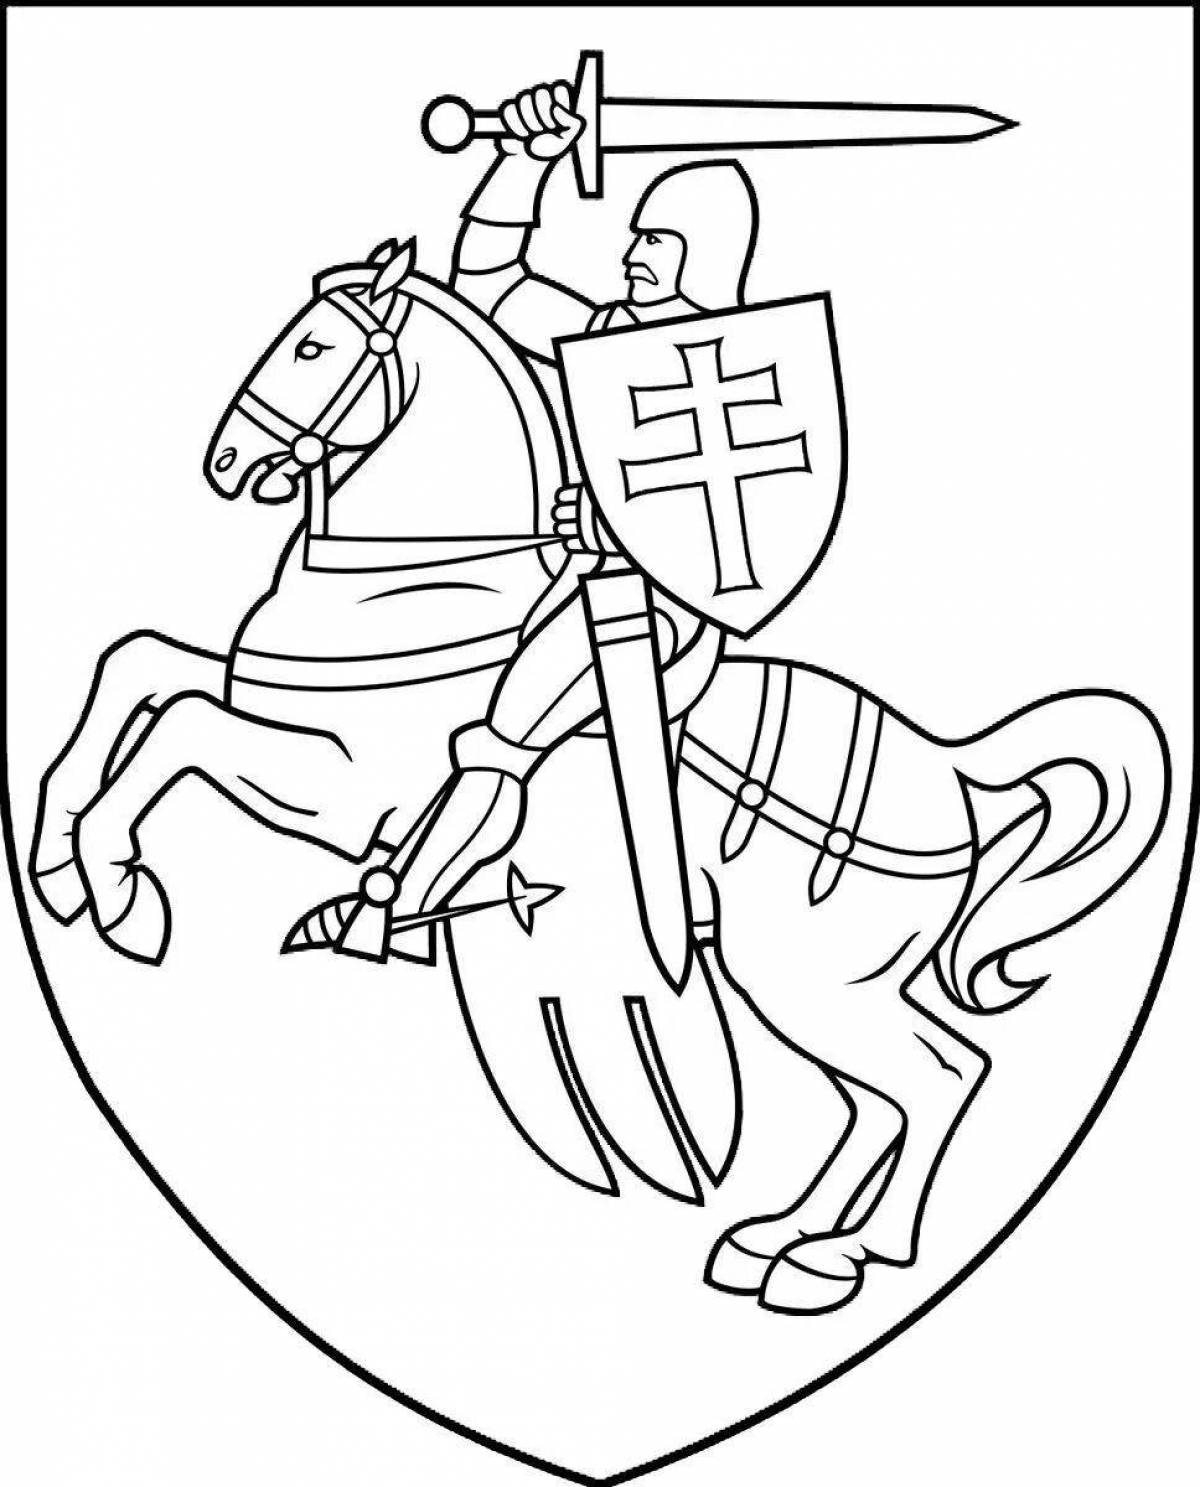 Королевская раскраска герб рб